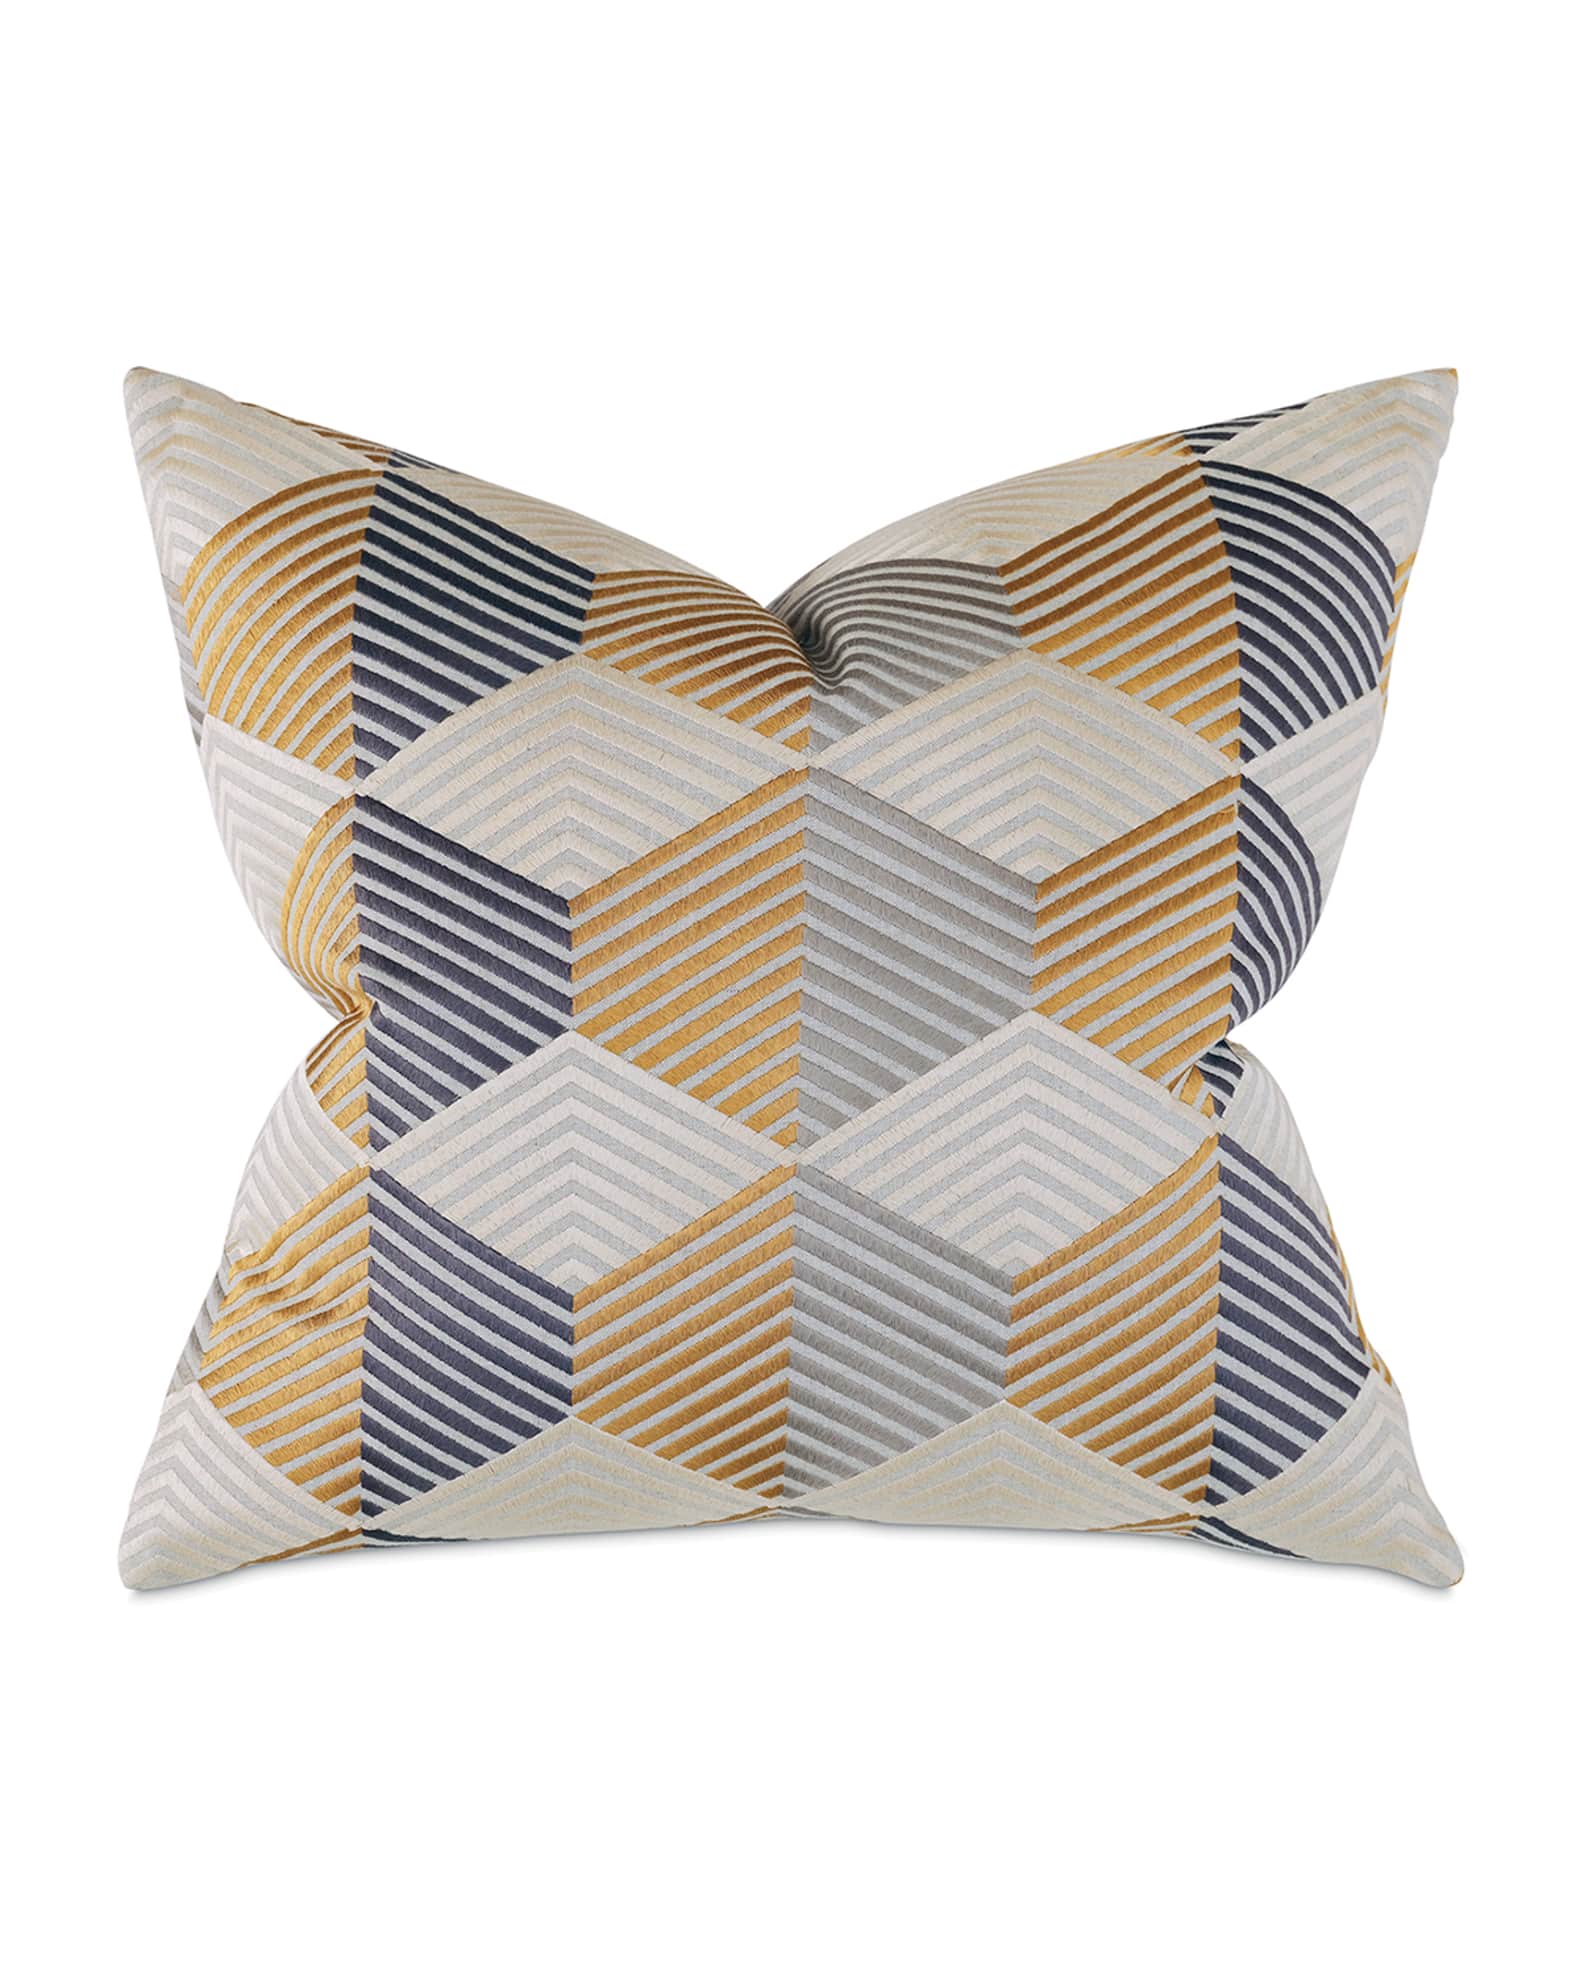 Eastern Accents Etude Zigzag Decorative Pillow